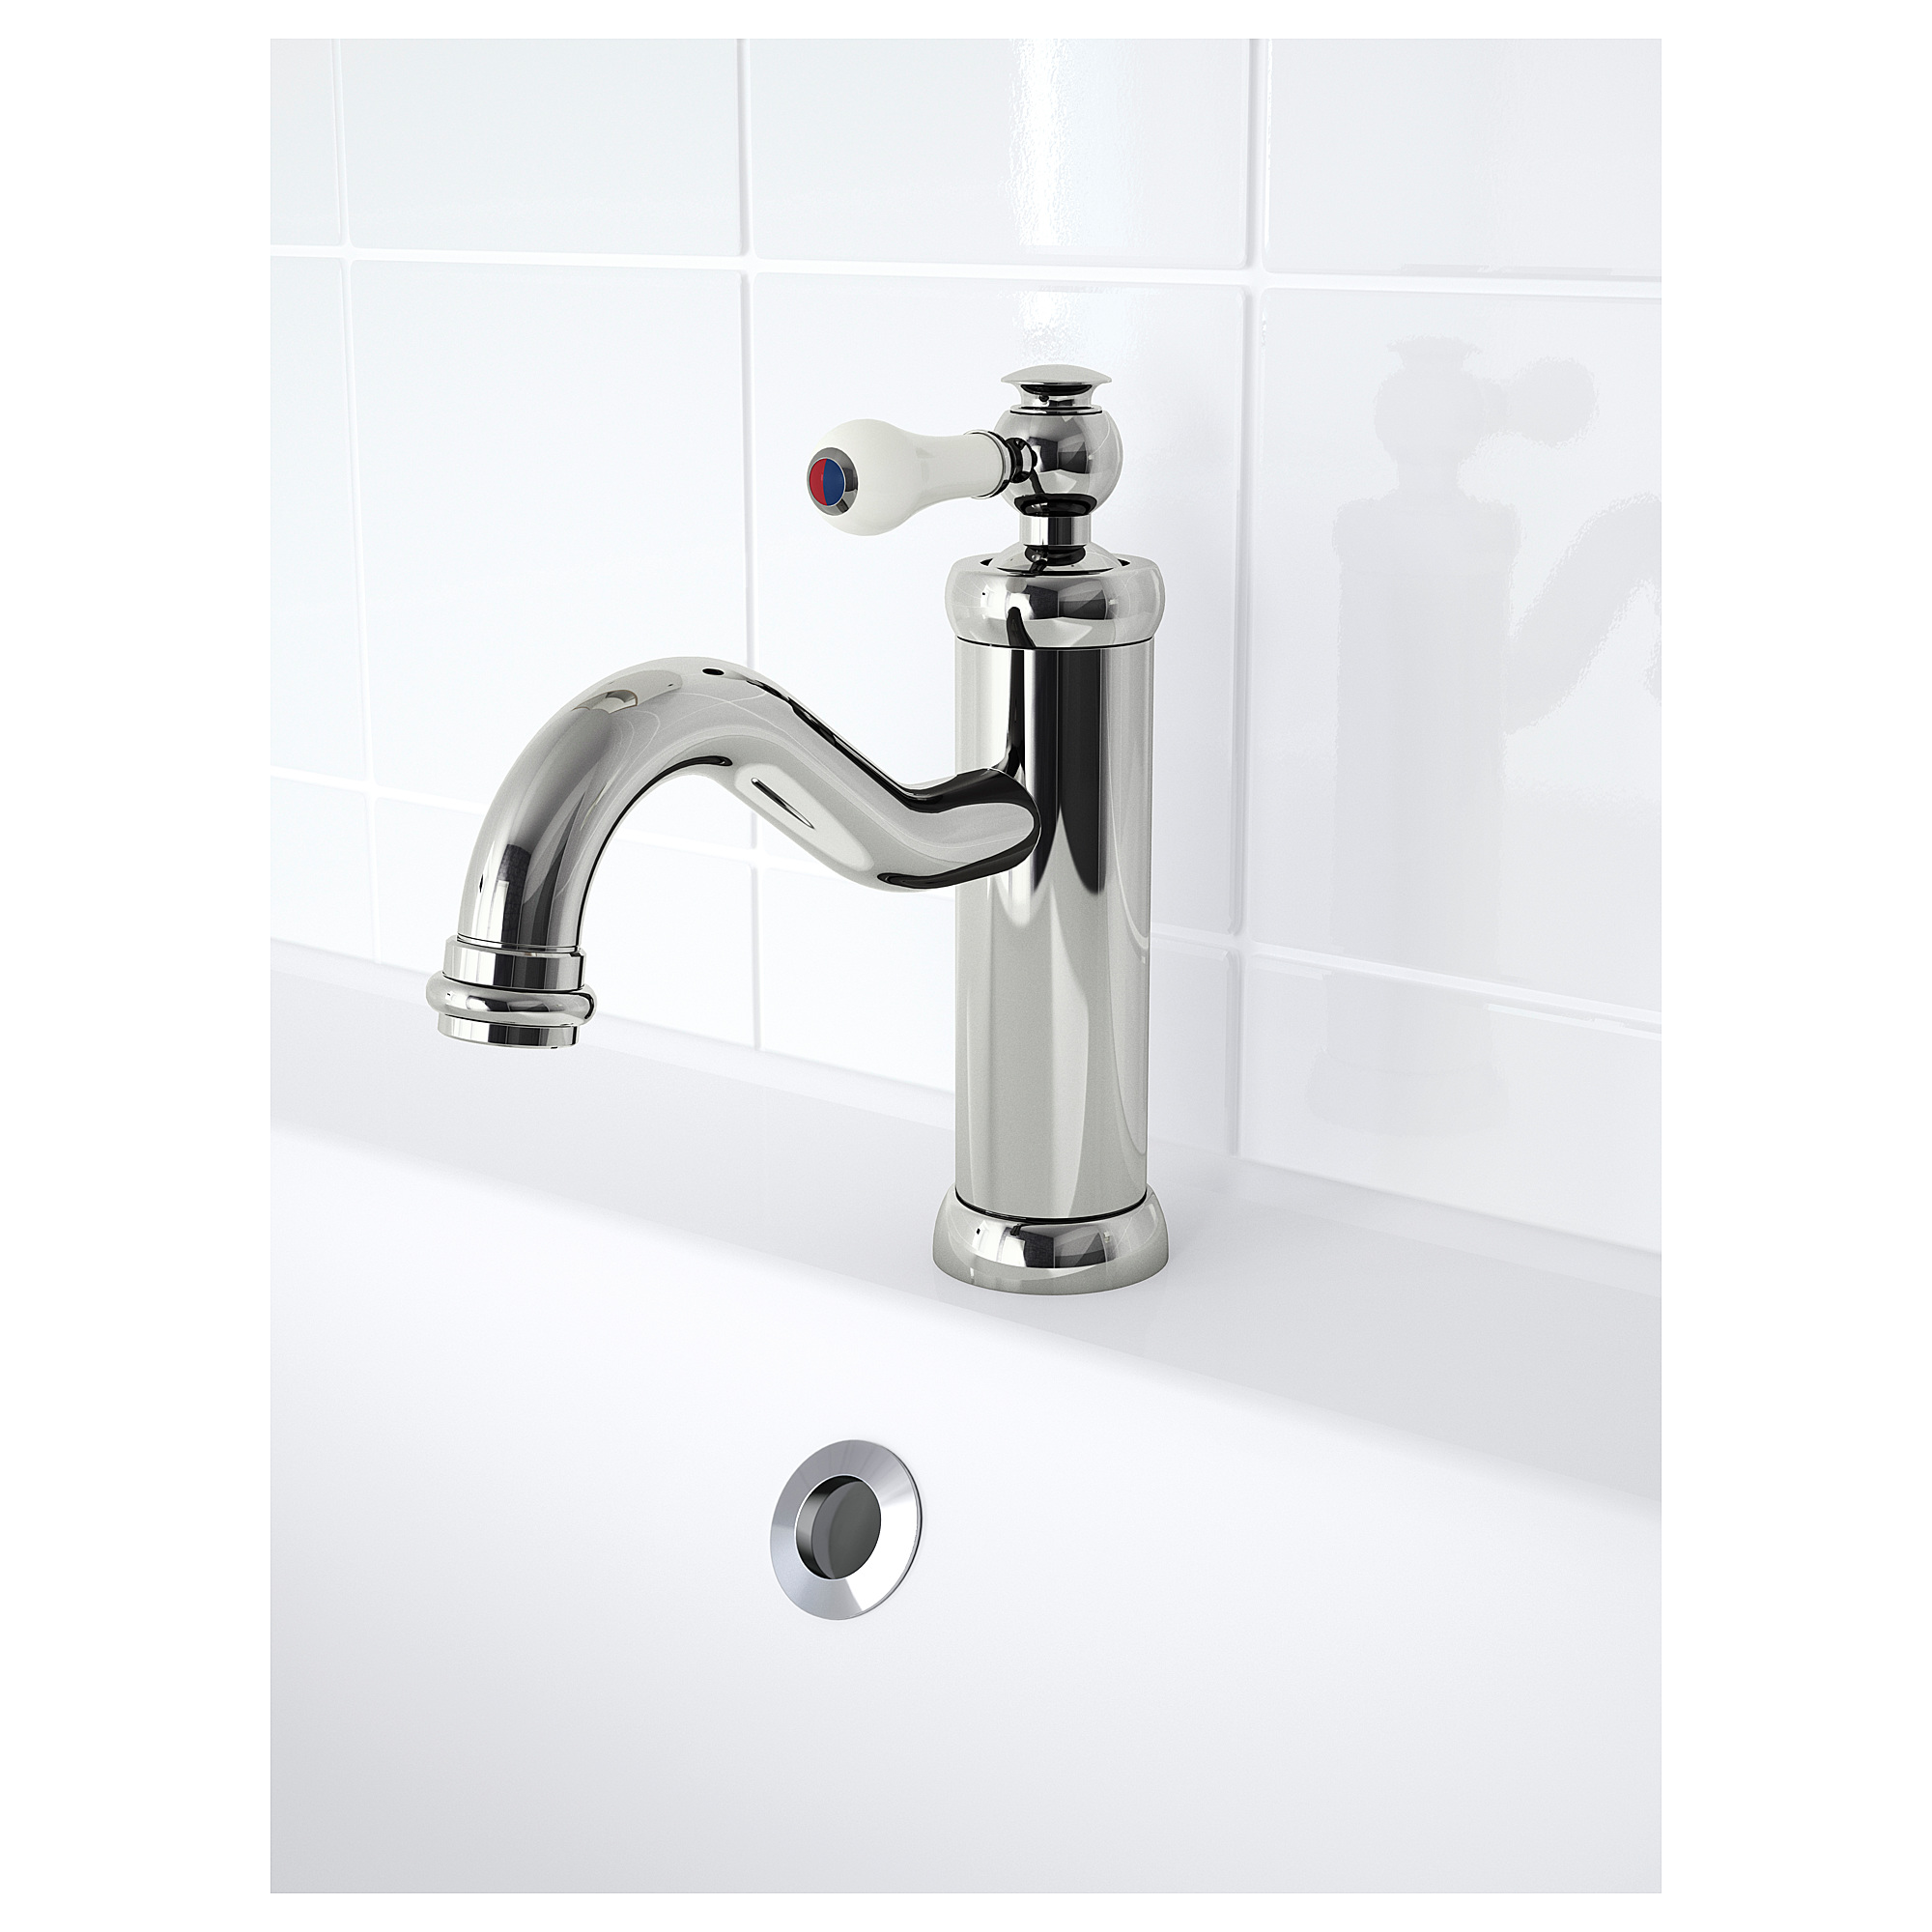 HAMNSKÄR wash-basin mixer tap with strainer